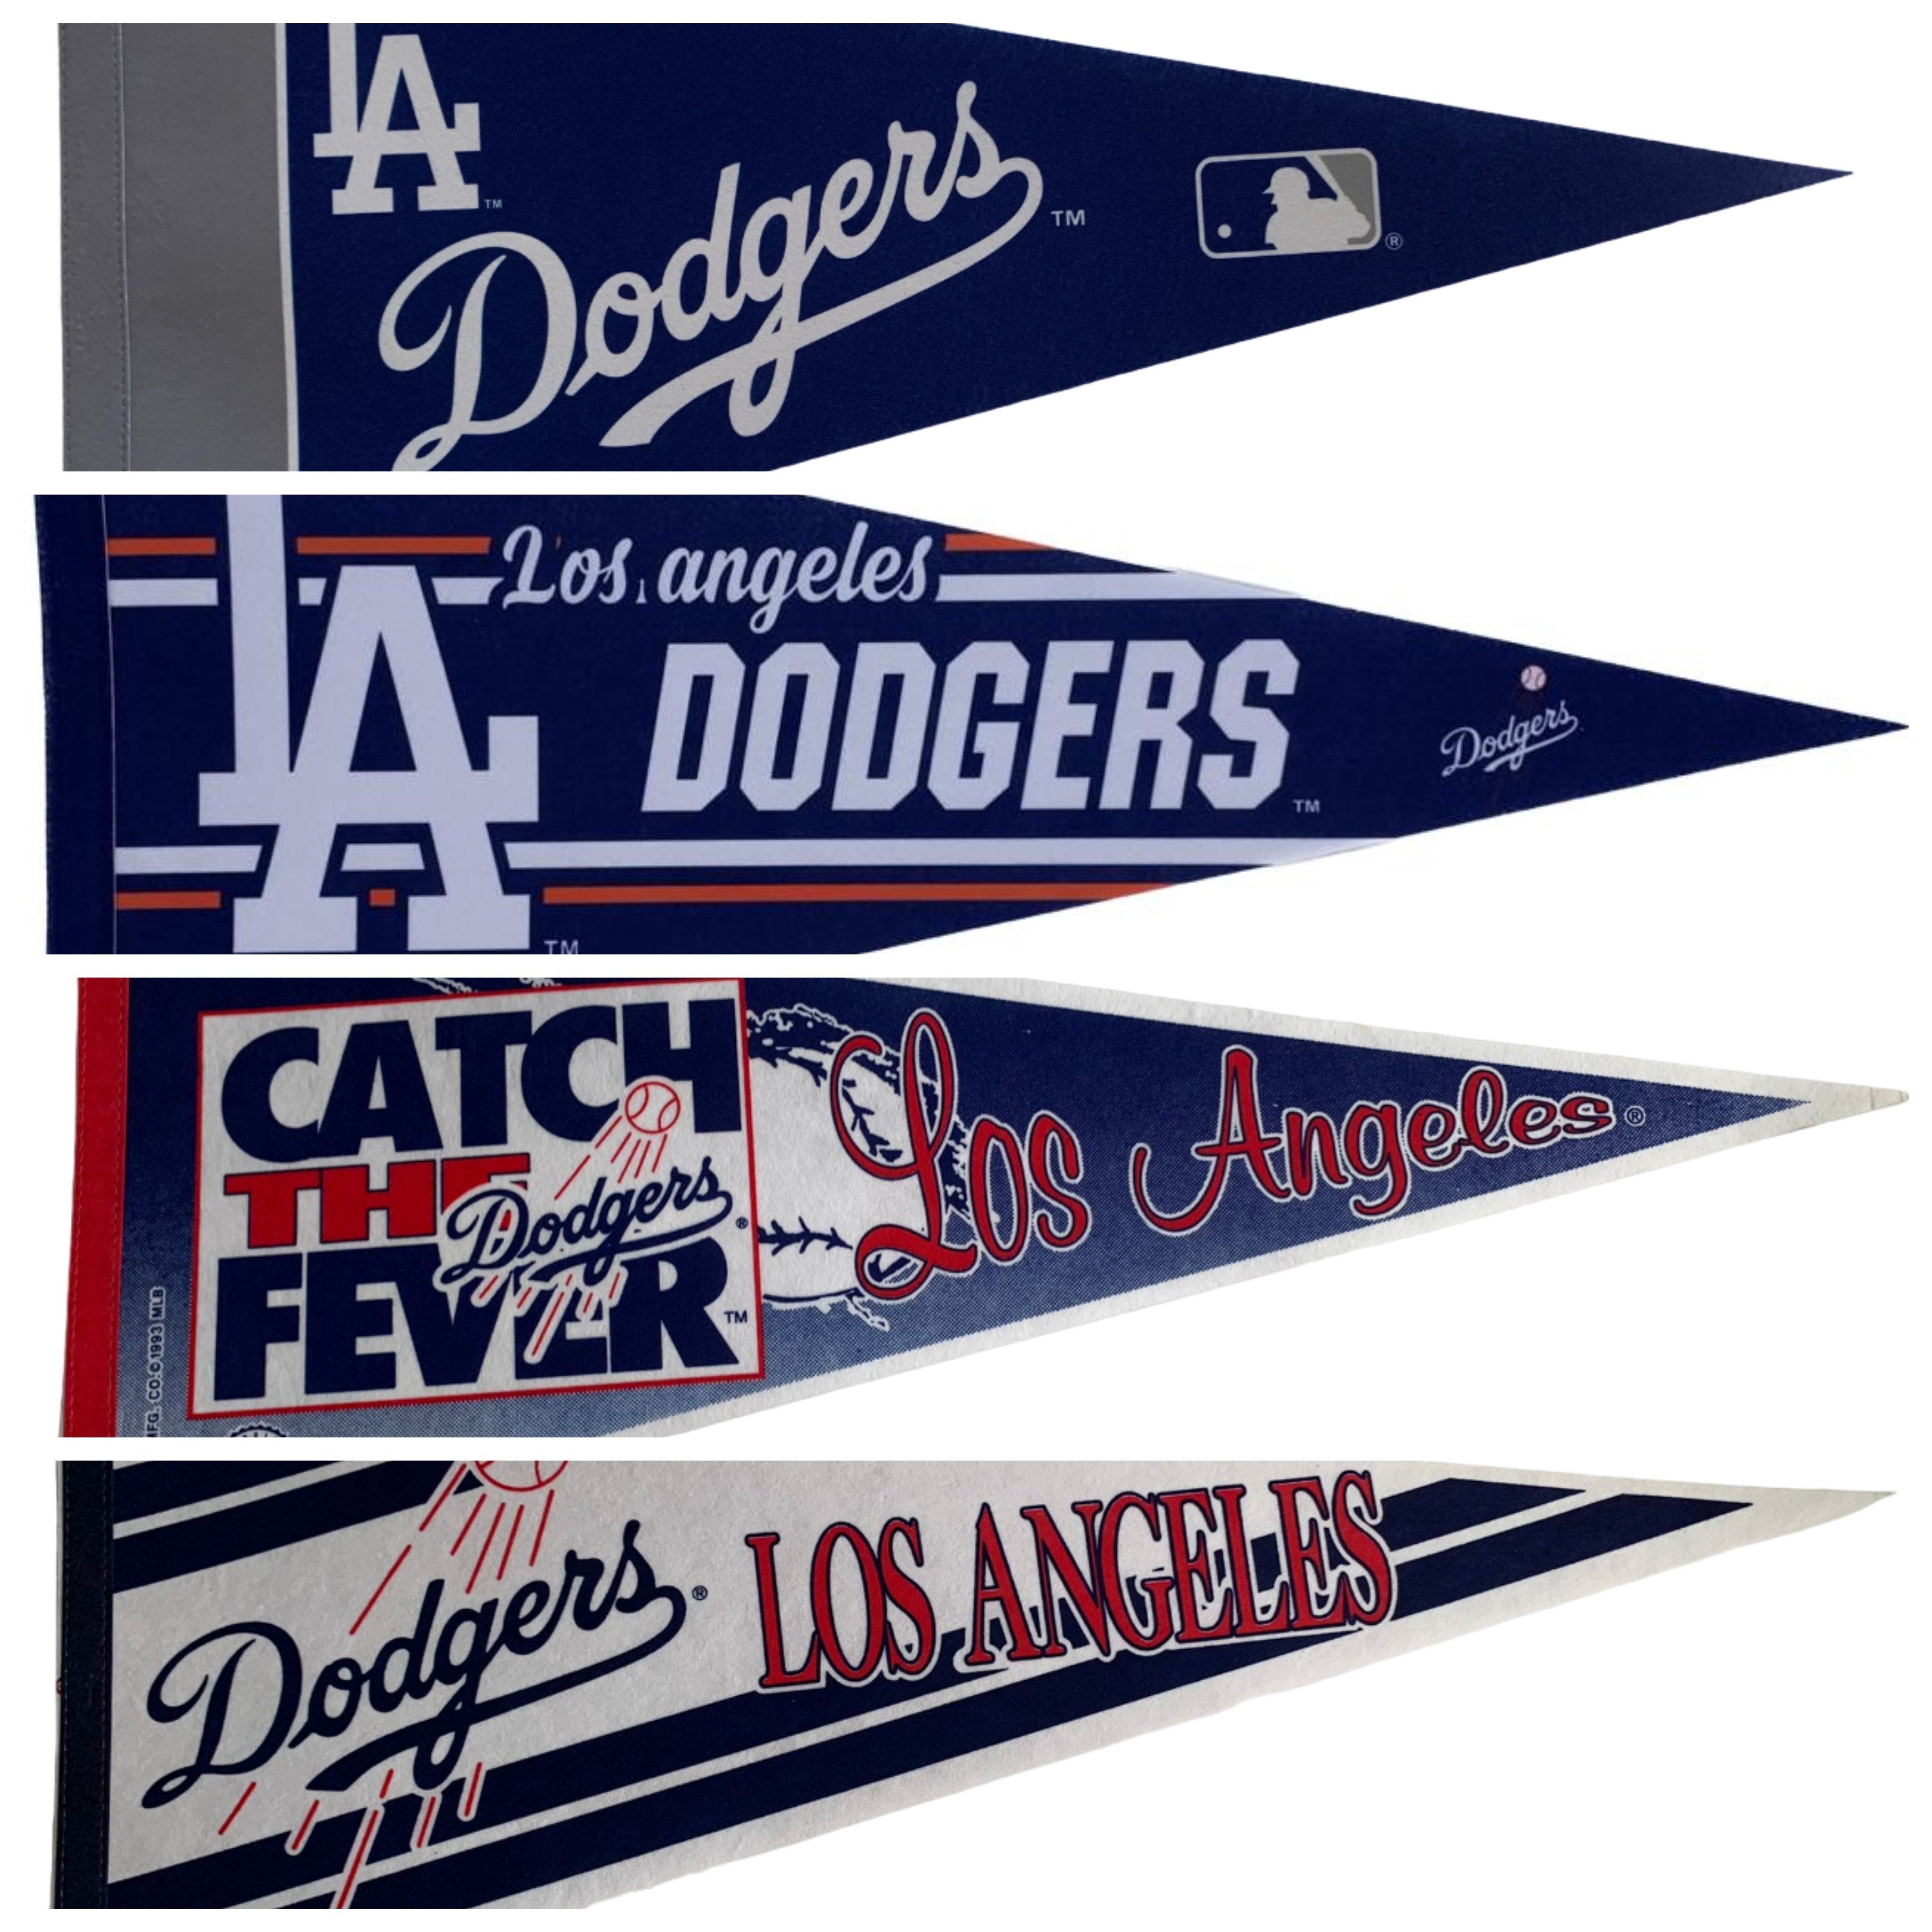 Los Angeles Dodgers california mlb pennants vaantje vlaggetje vlag vaantje fanion pennant flag honkbal basebal la kobe bryant - Design2Logo